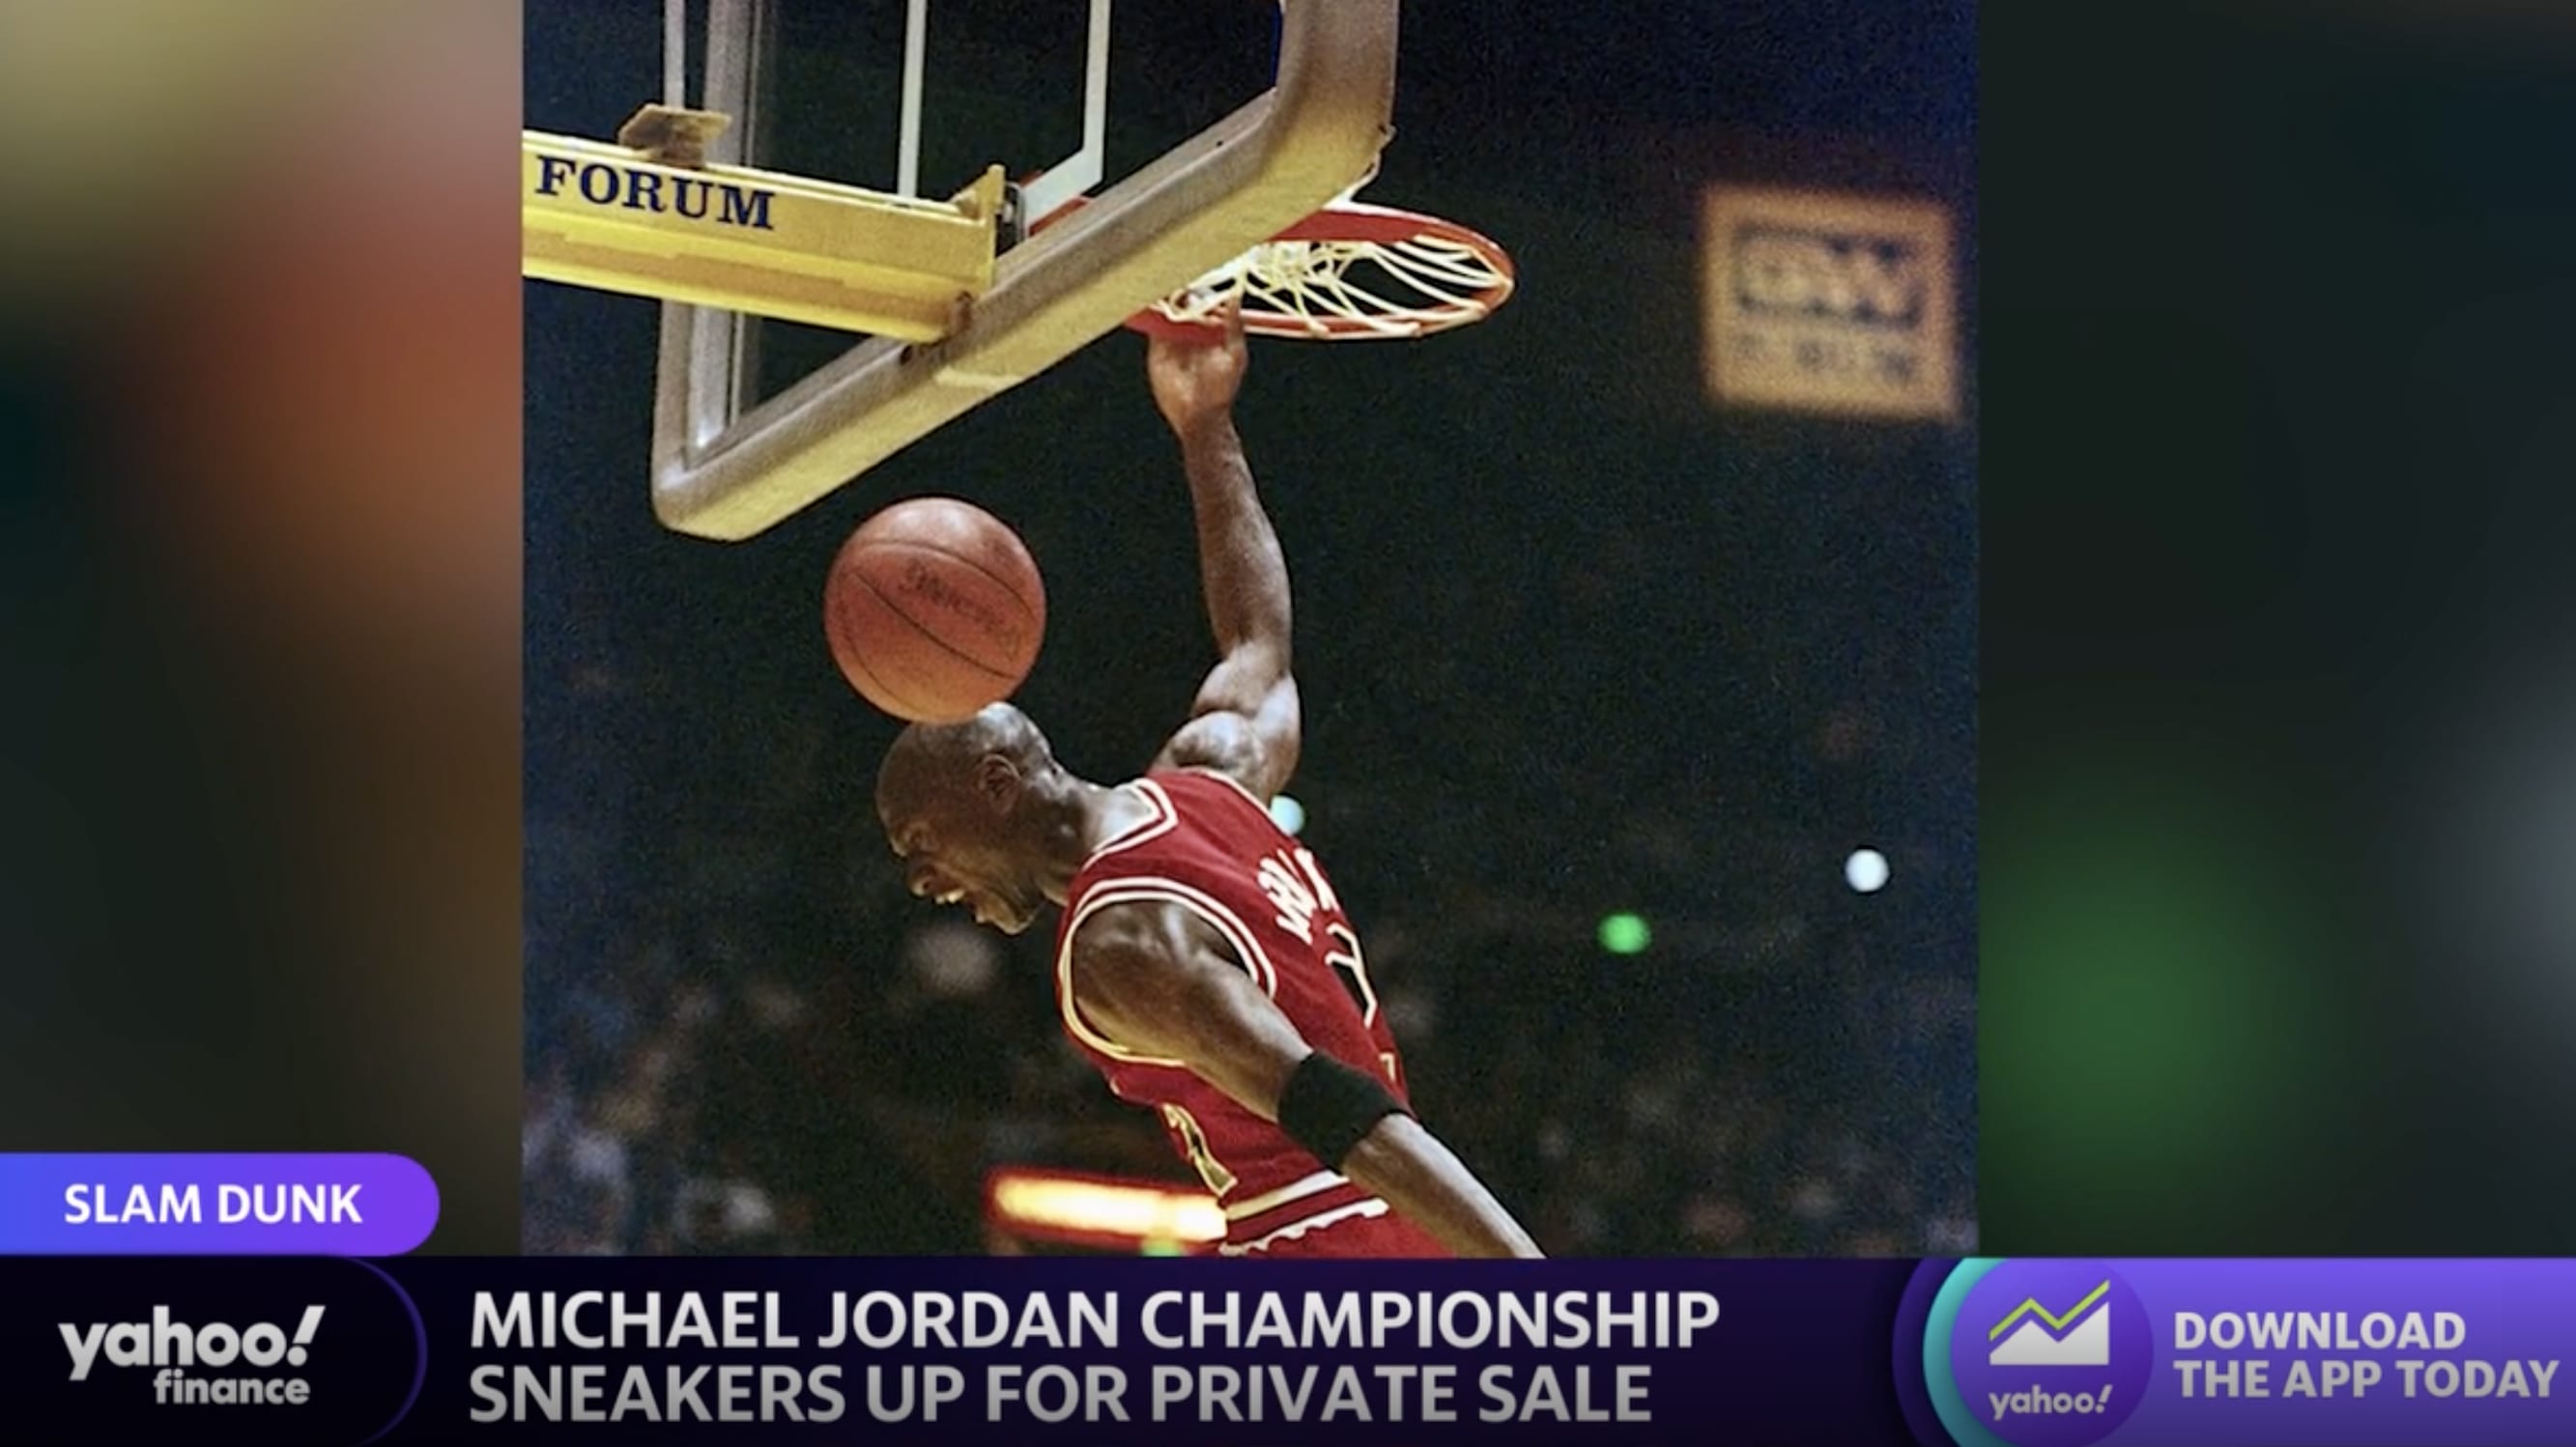 Record-setting $10 million Michael Jordan jersey shows sports